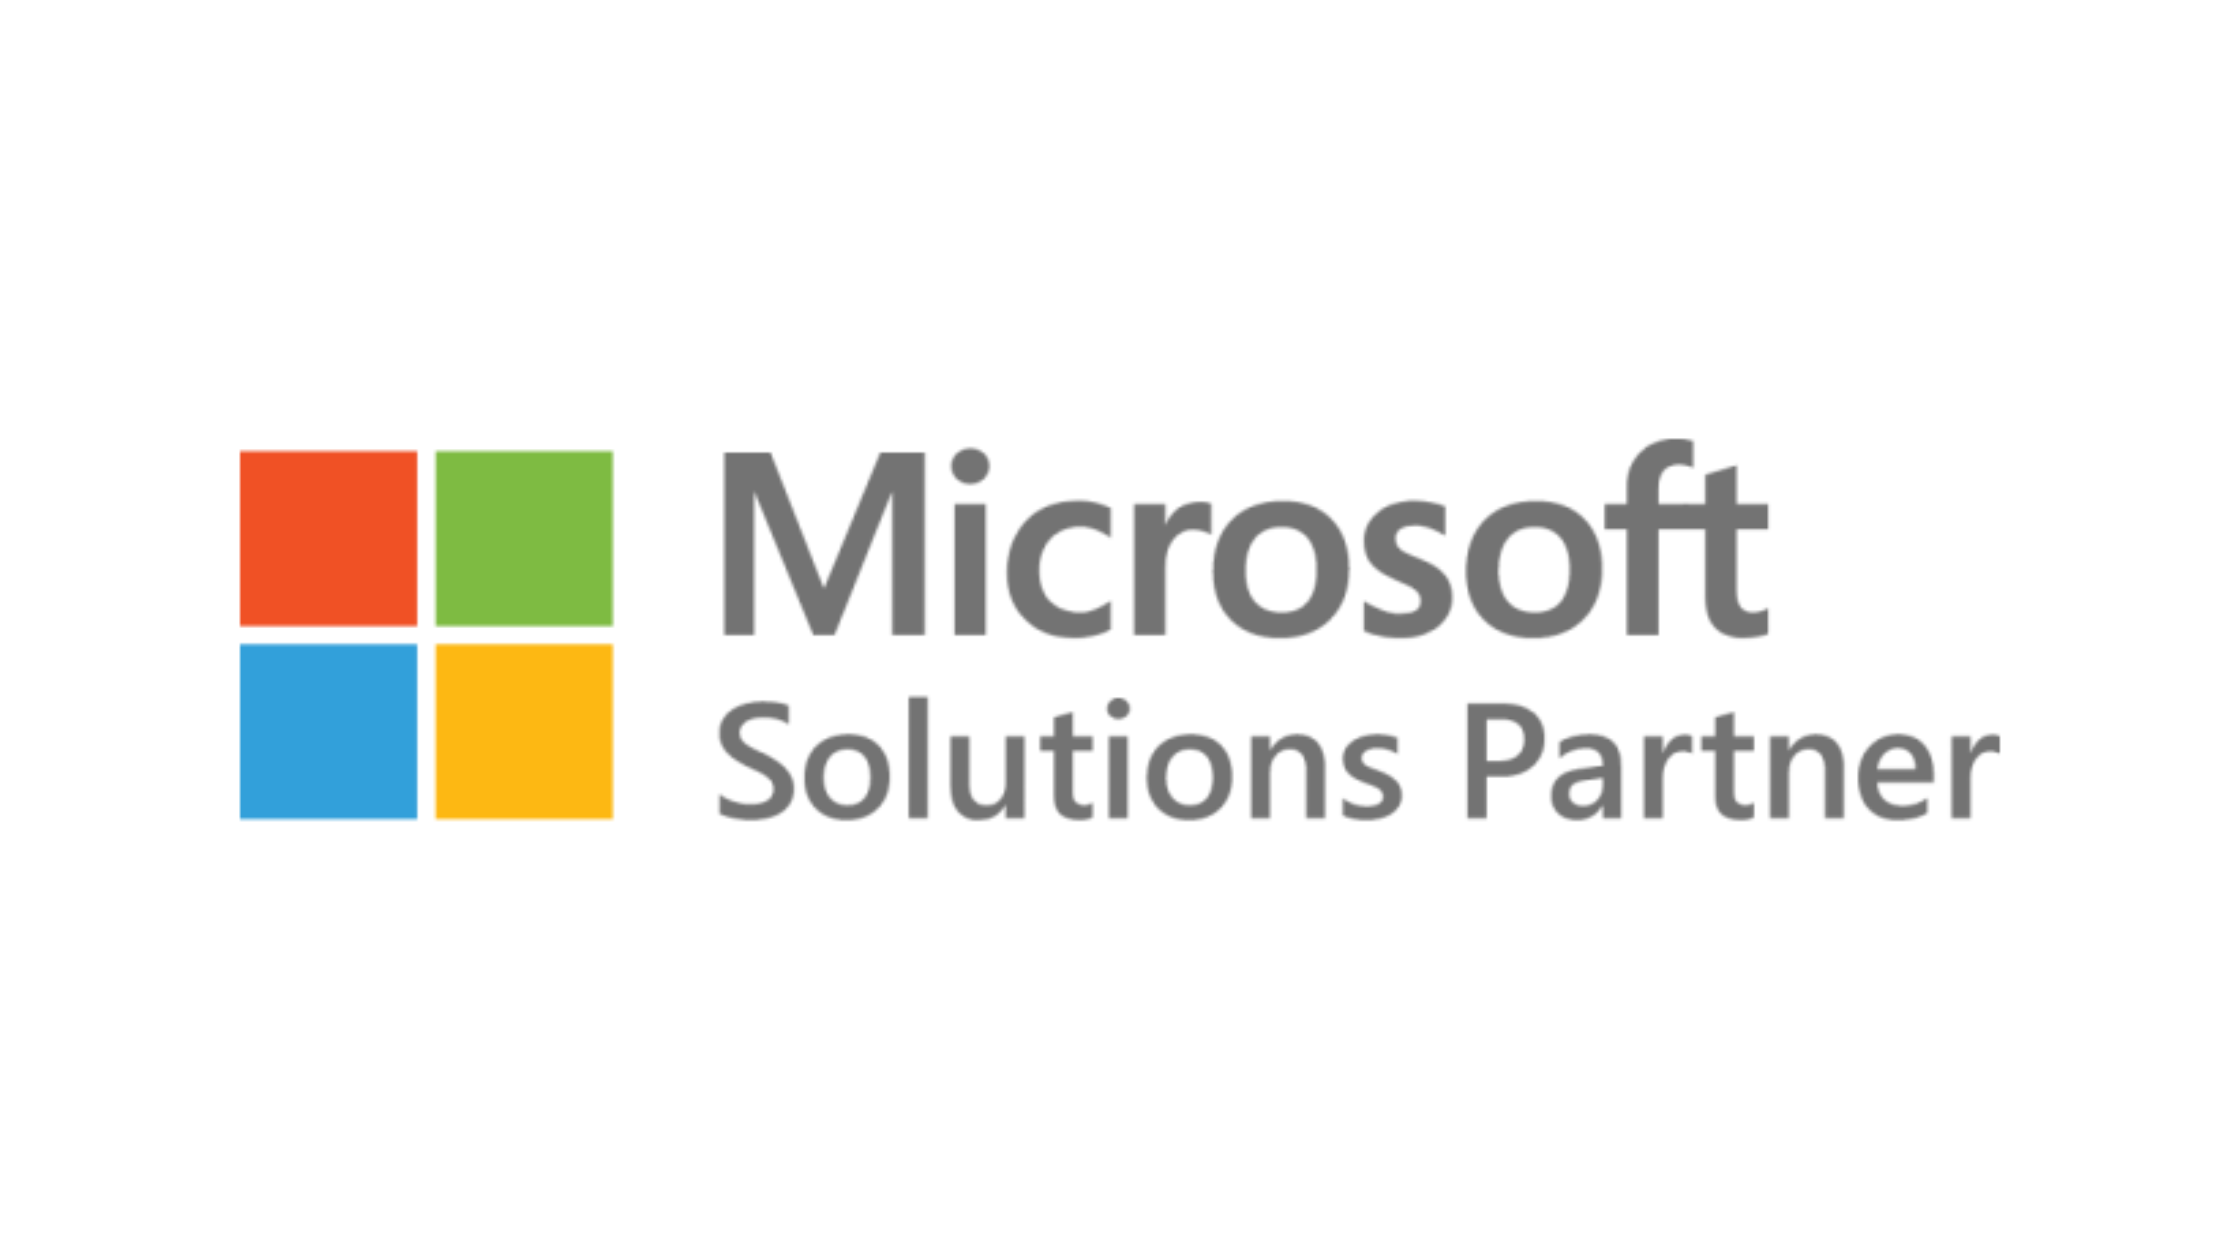 microsoft solution partenrs - resize new logo 